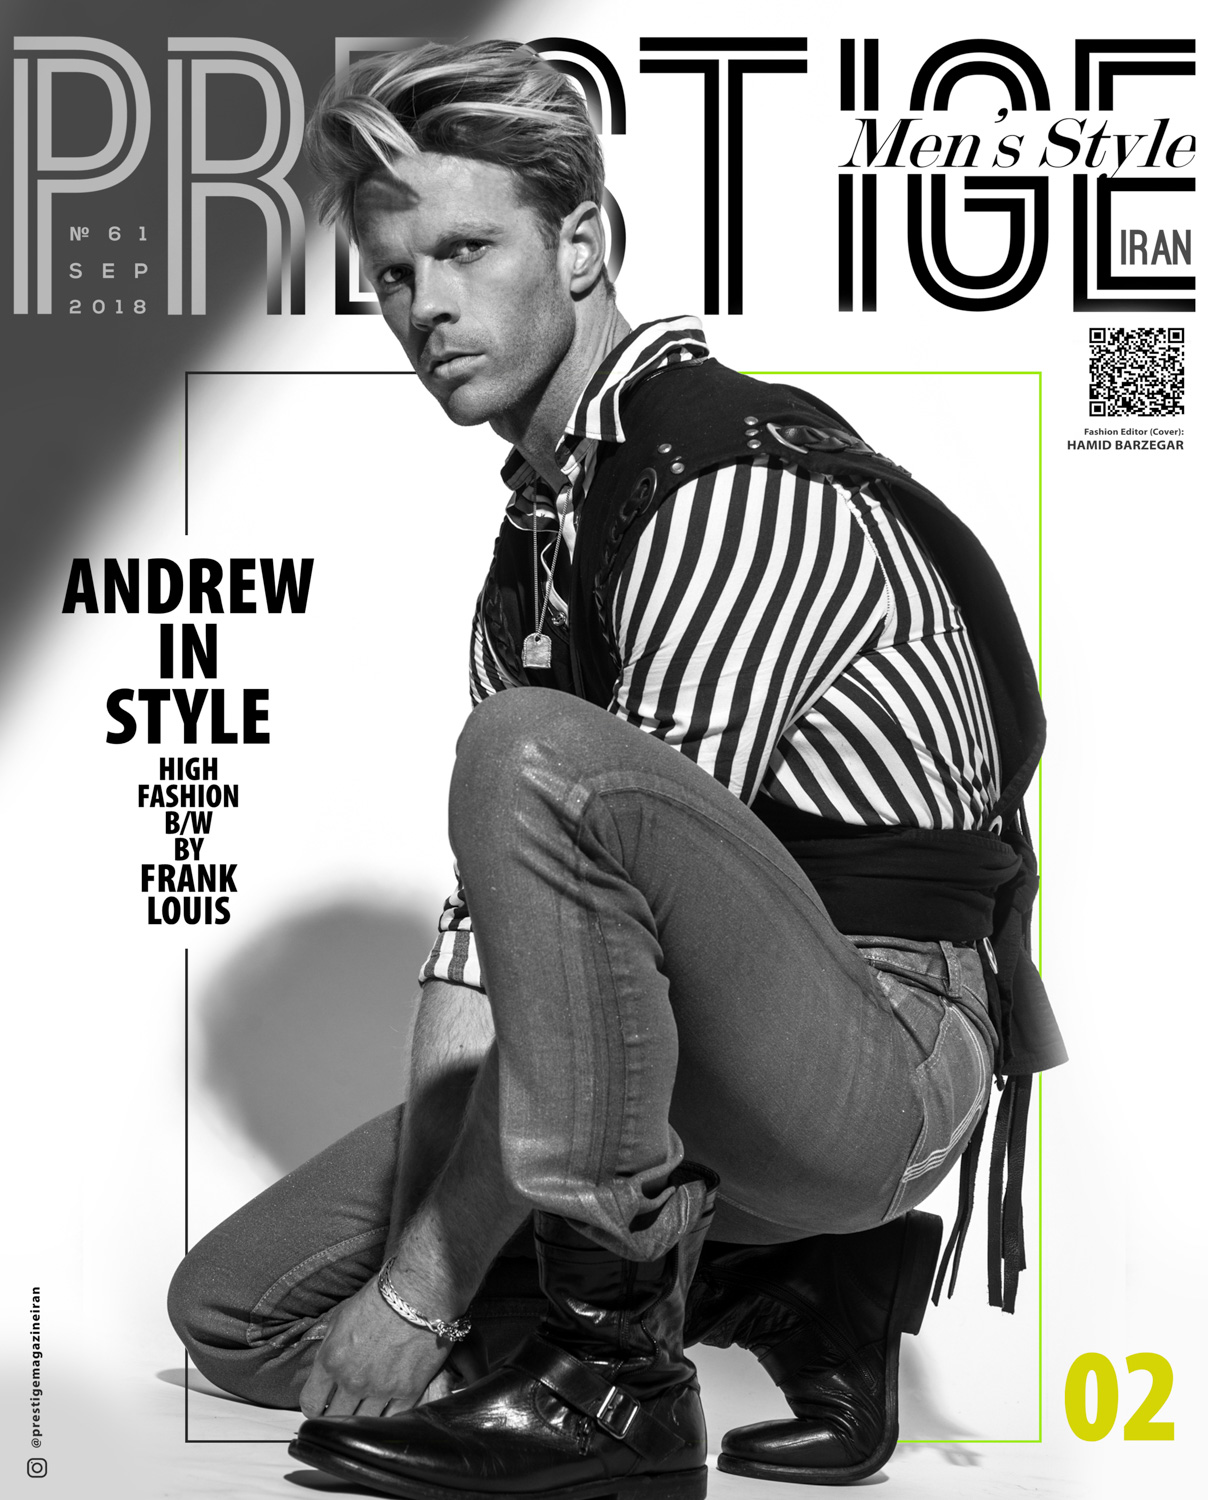 Prestige Men's Style Magazine No.61 Sep2018 Cover.jpg